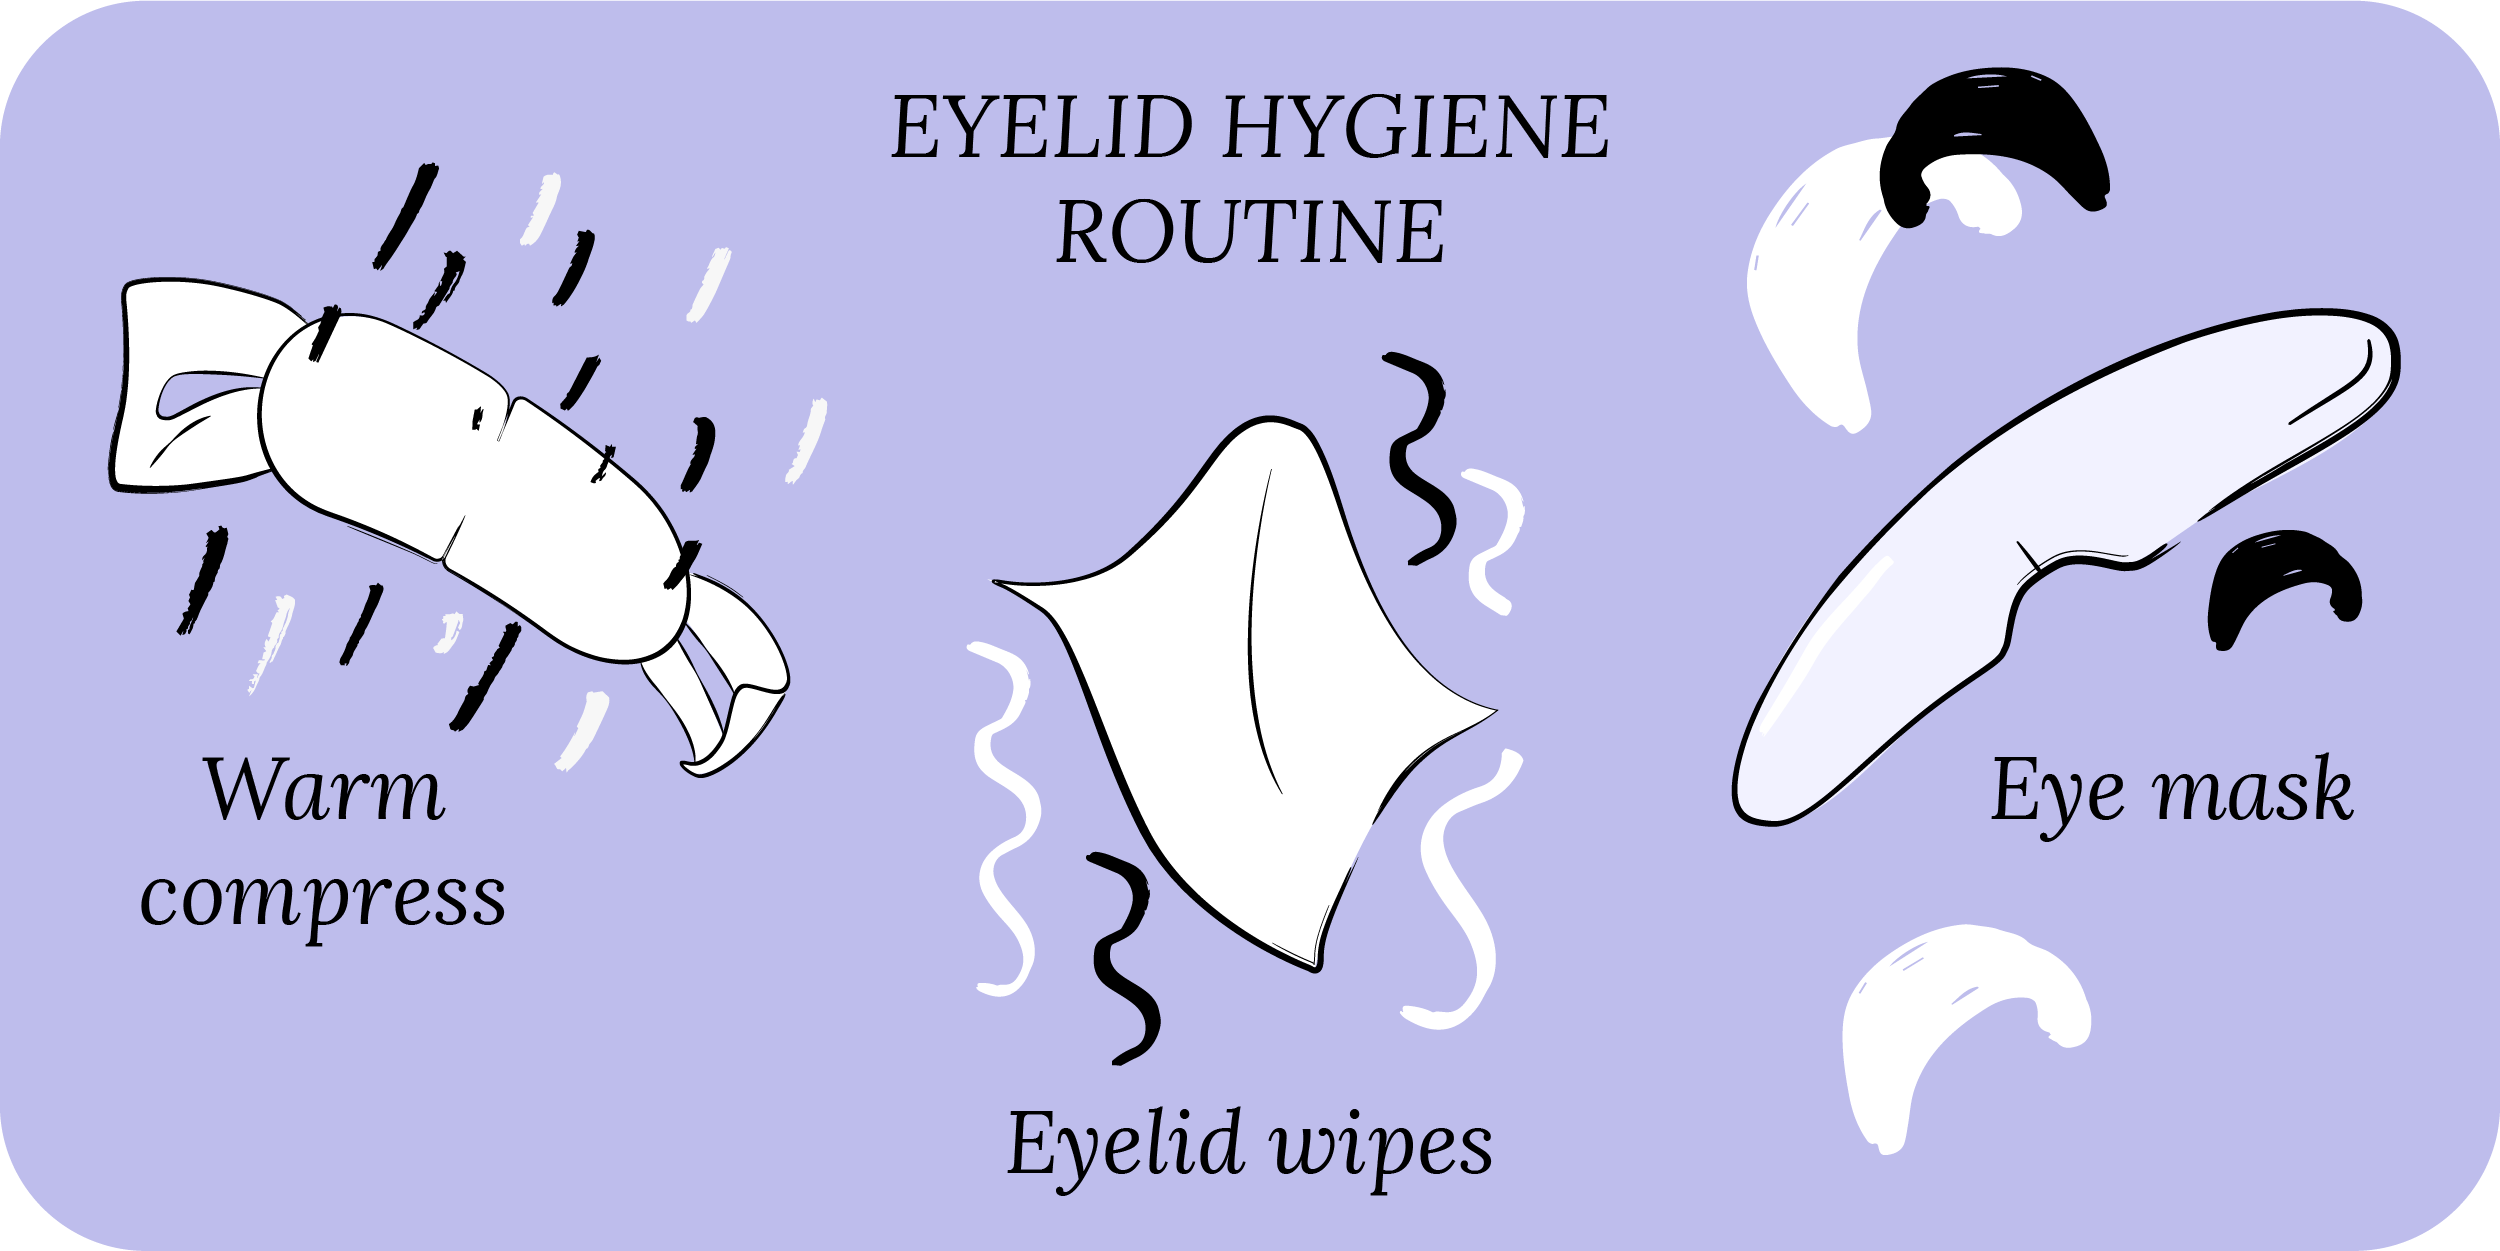 Eyelid hygiene routine: warm compress, eyelid wipes, eye mask